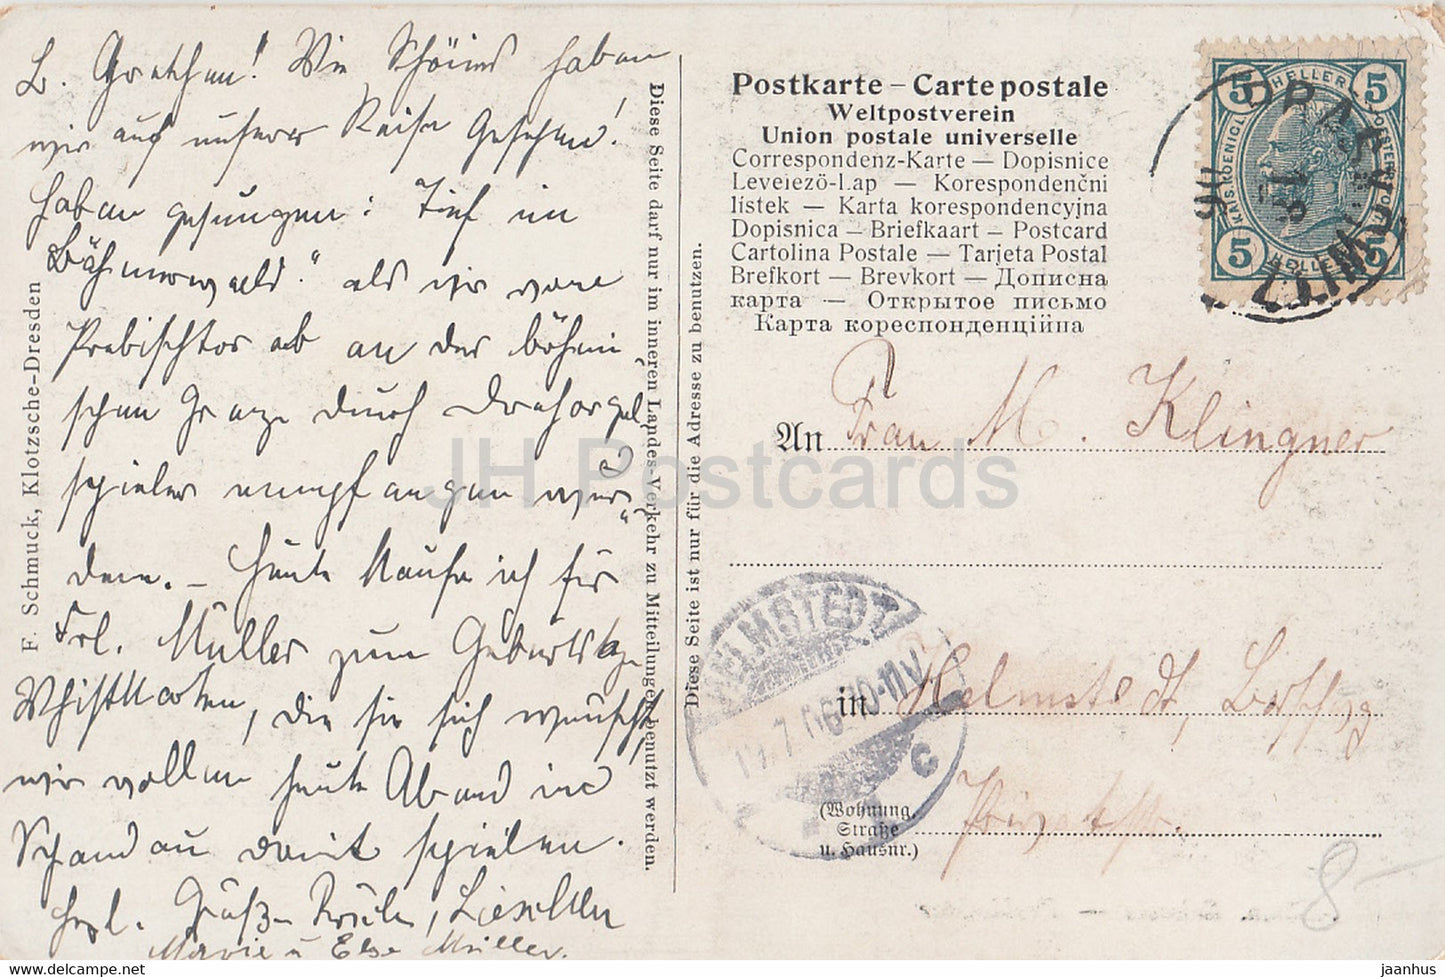 Sachs Bohm - Schweiz - Prebischtor - carte postale ancienne - 1906 - Allemagne - utilisé